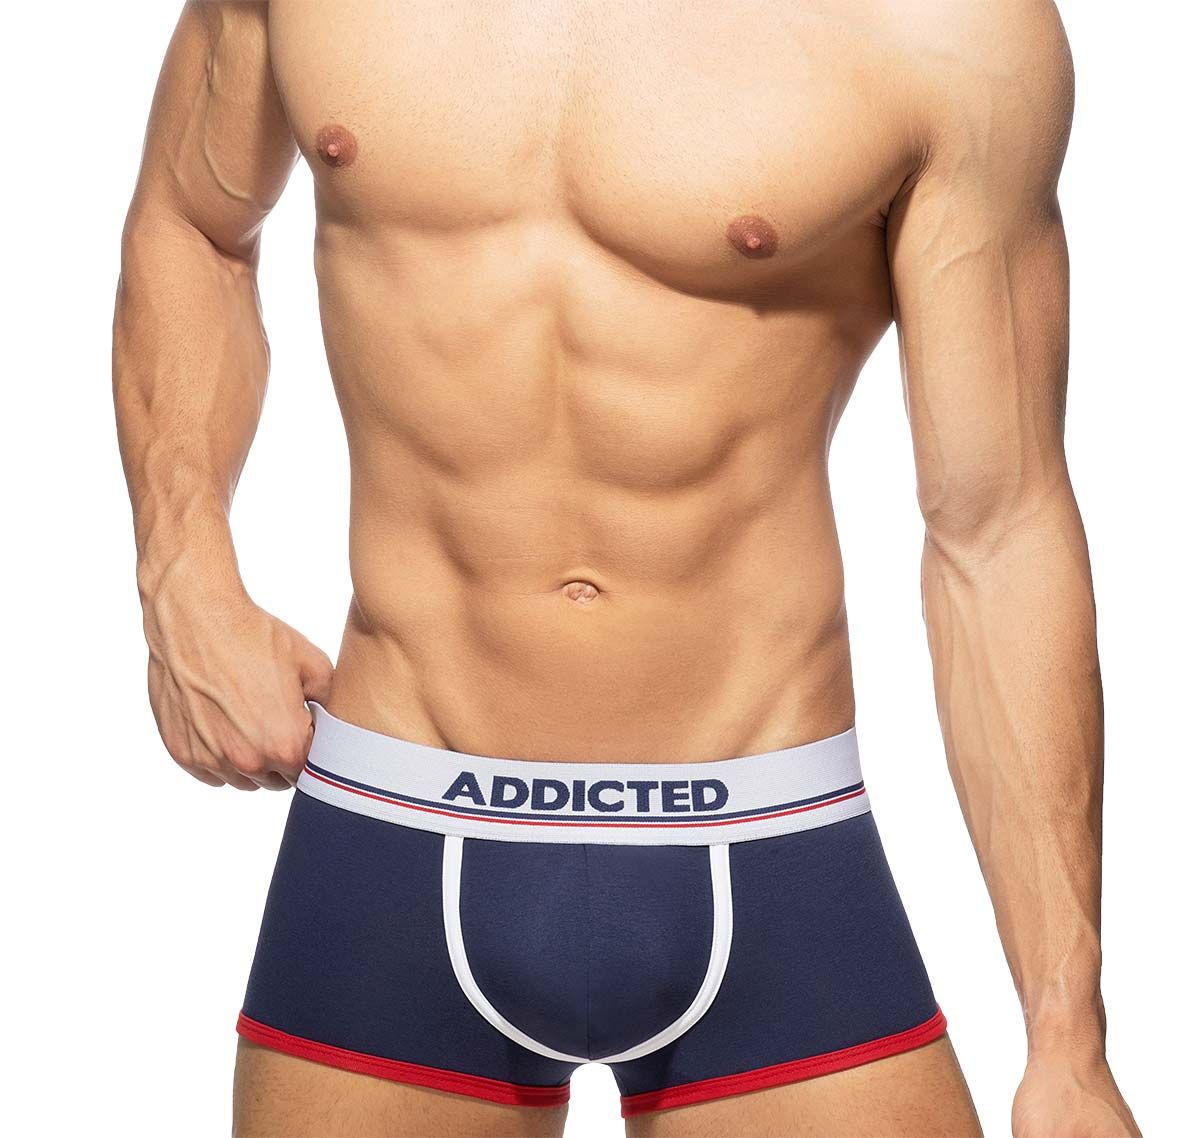 Addicted Pakket van 3 ondergoed boxer TOMMY 3 PACK TRUNK AD1009P, wit/rood/navy blauw